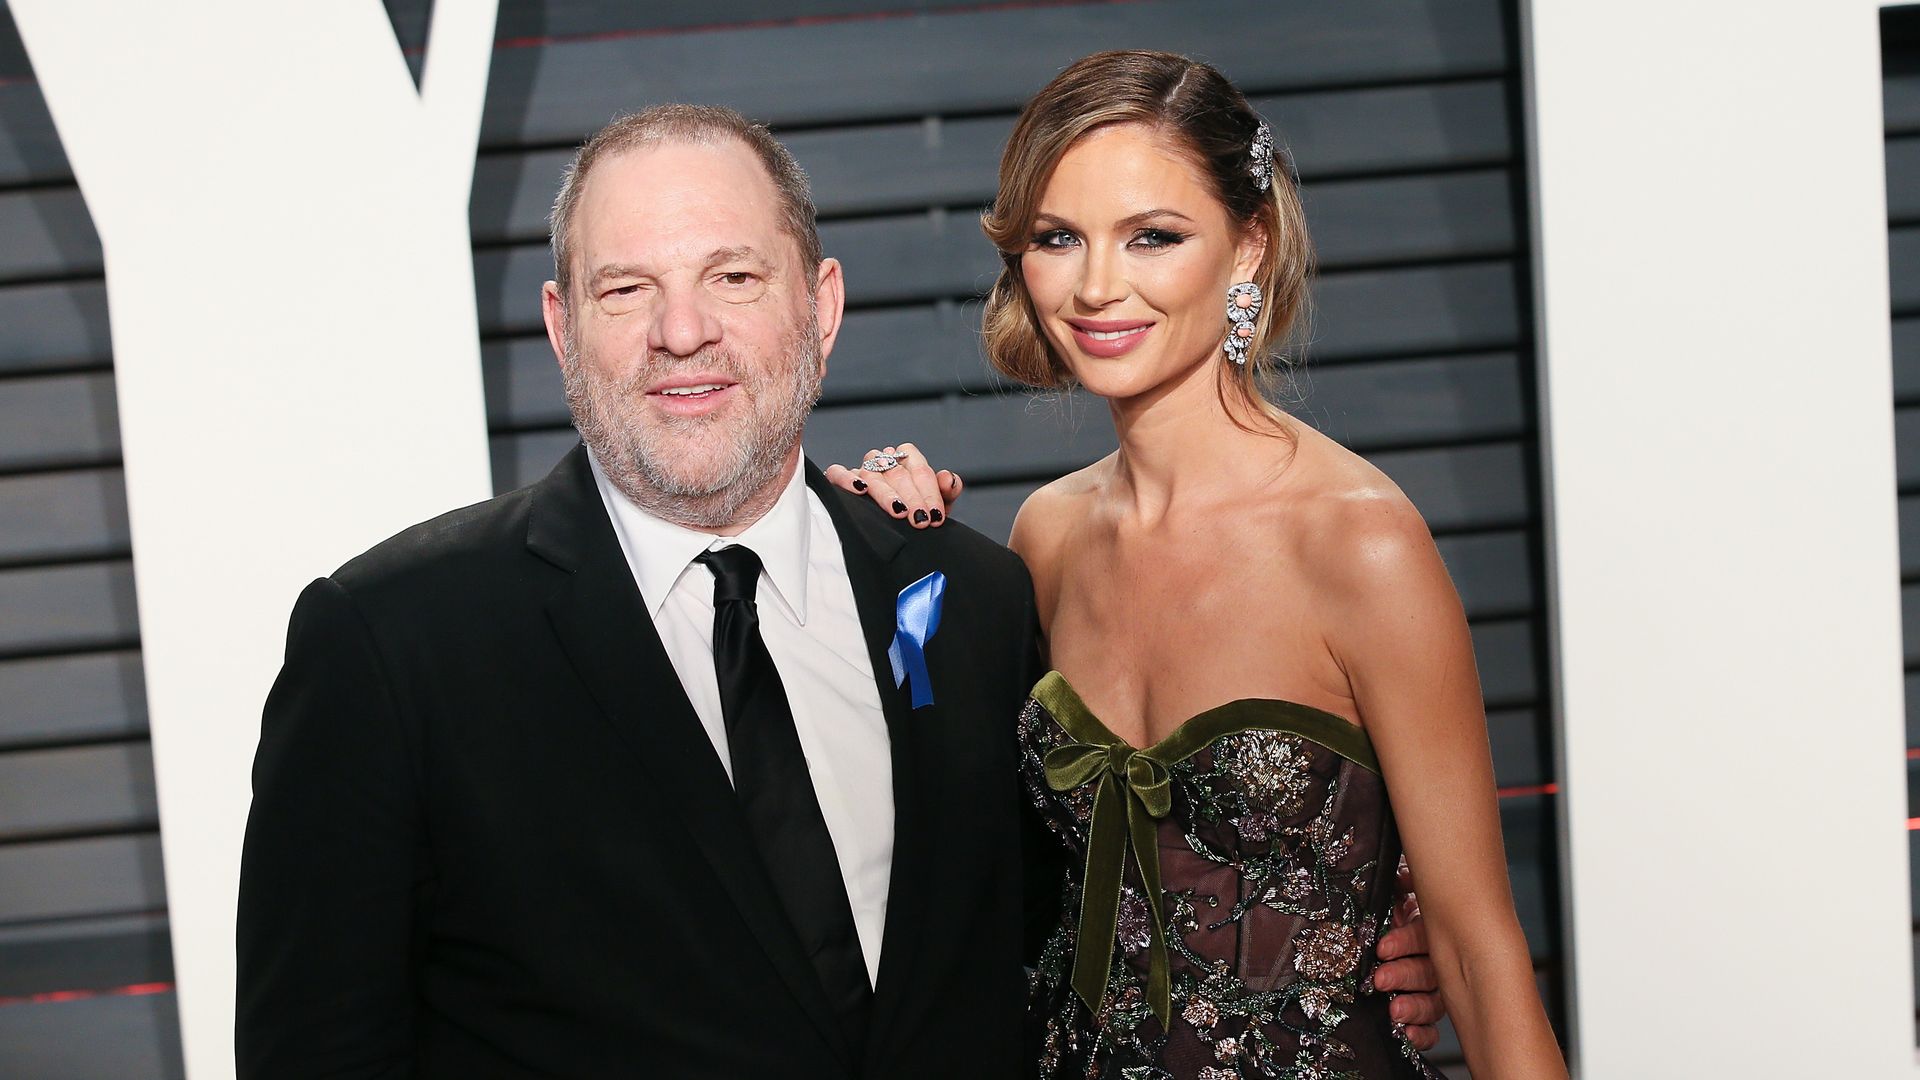 Georgina Chapman gives first interview on ex-husband Harvey Weinstein - Axios